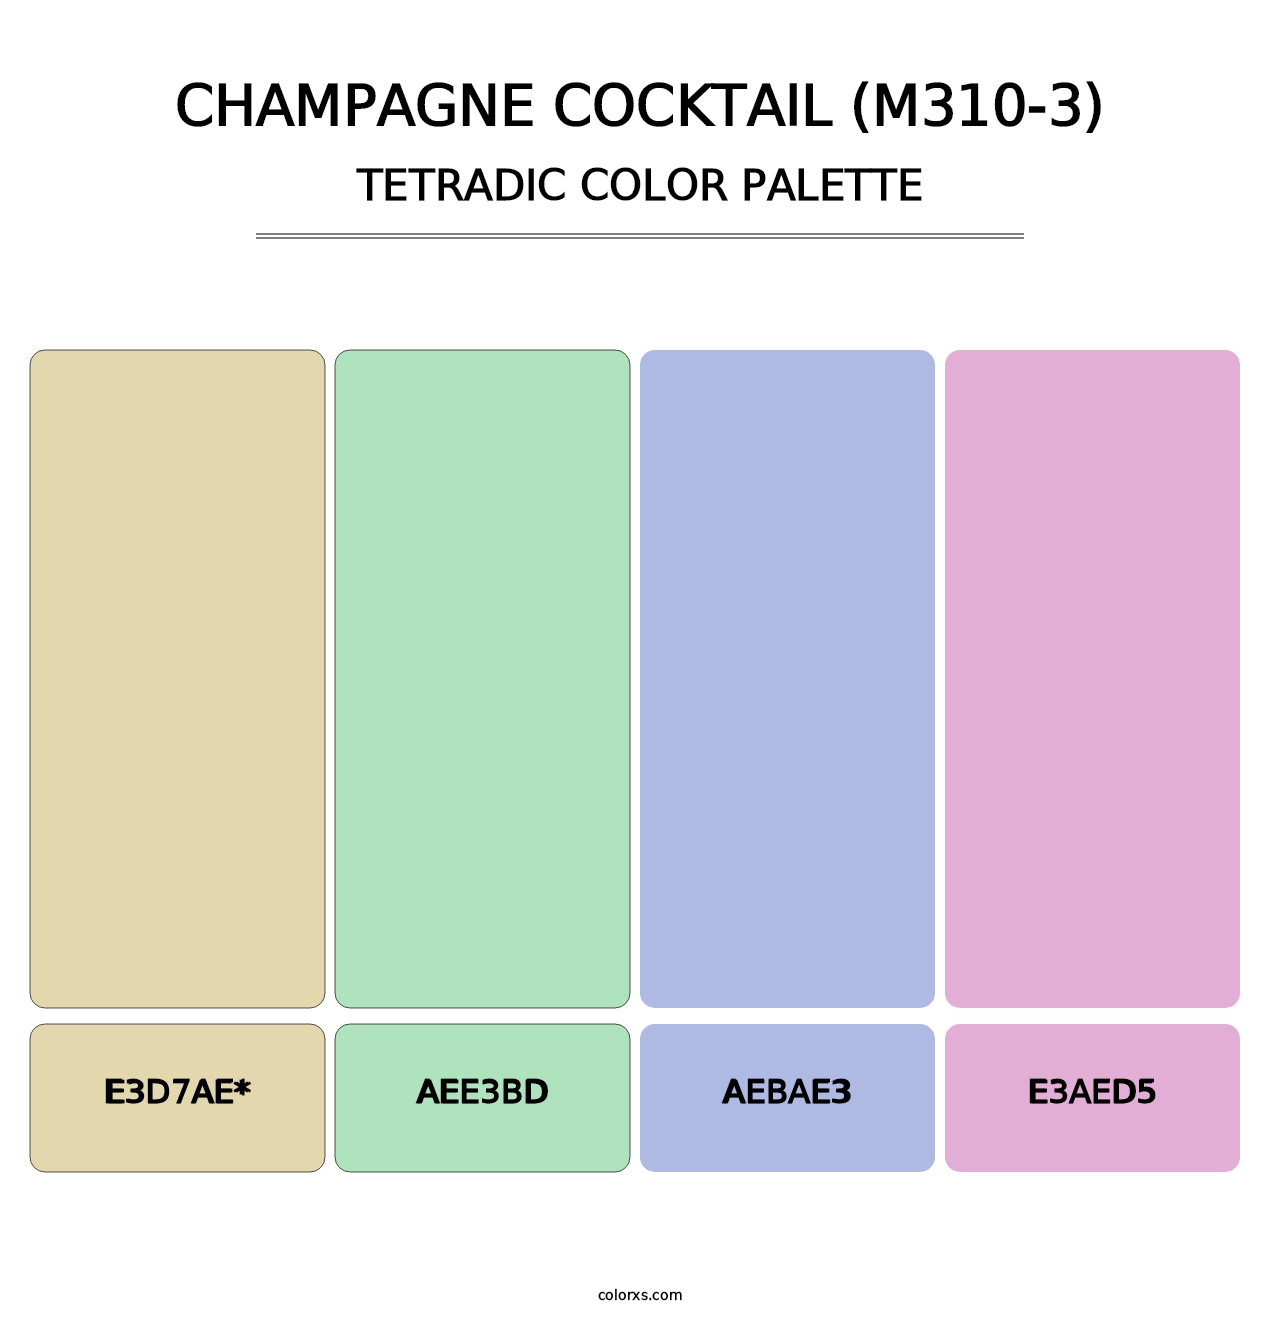 Champagne Cocktail (M310-3) - Tetradic Color Palette